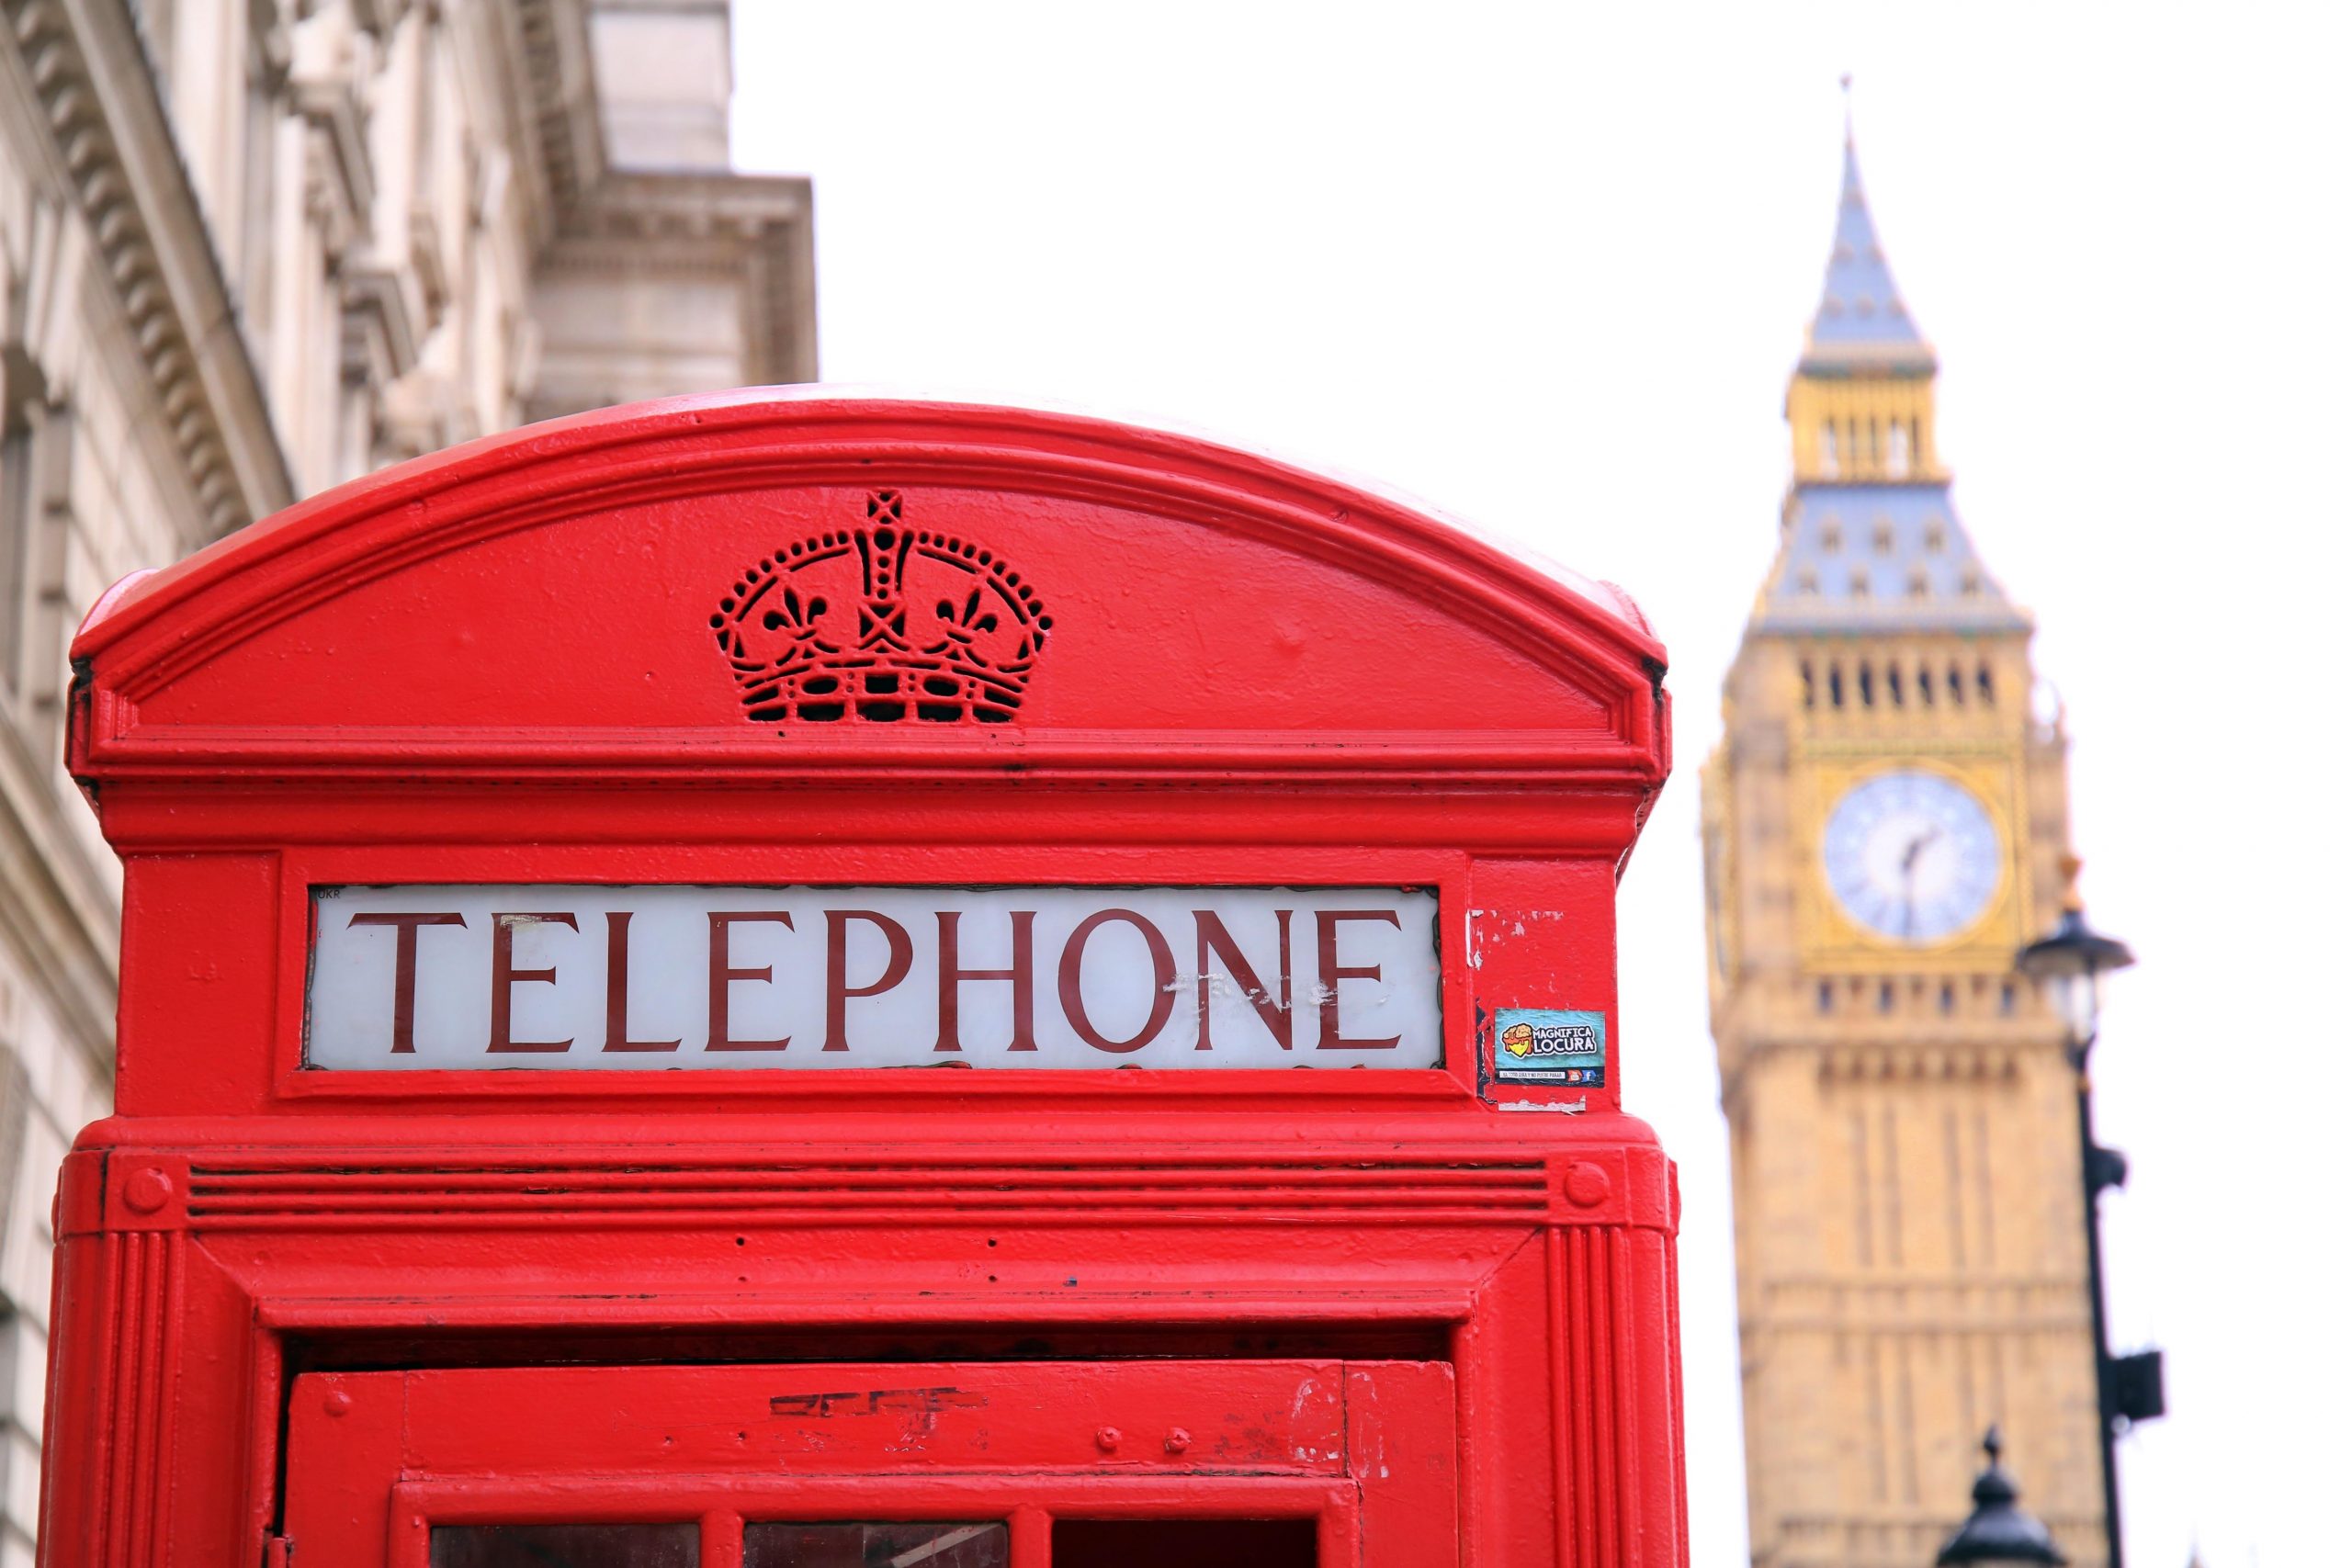 London phonebooth